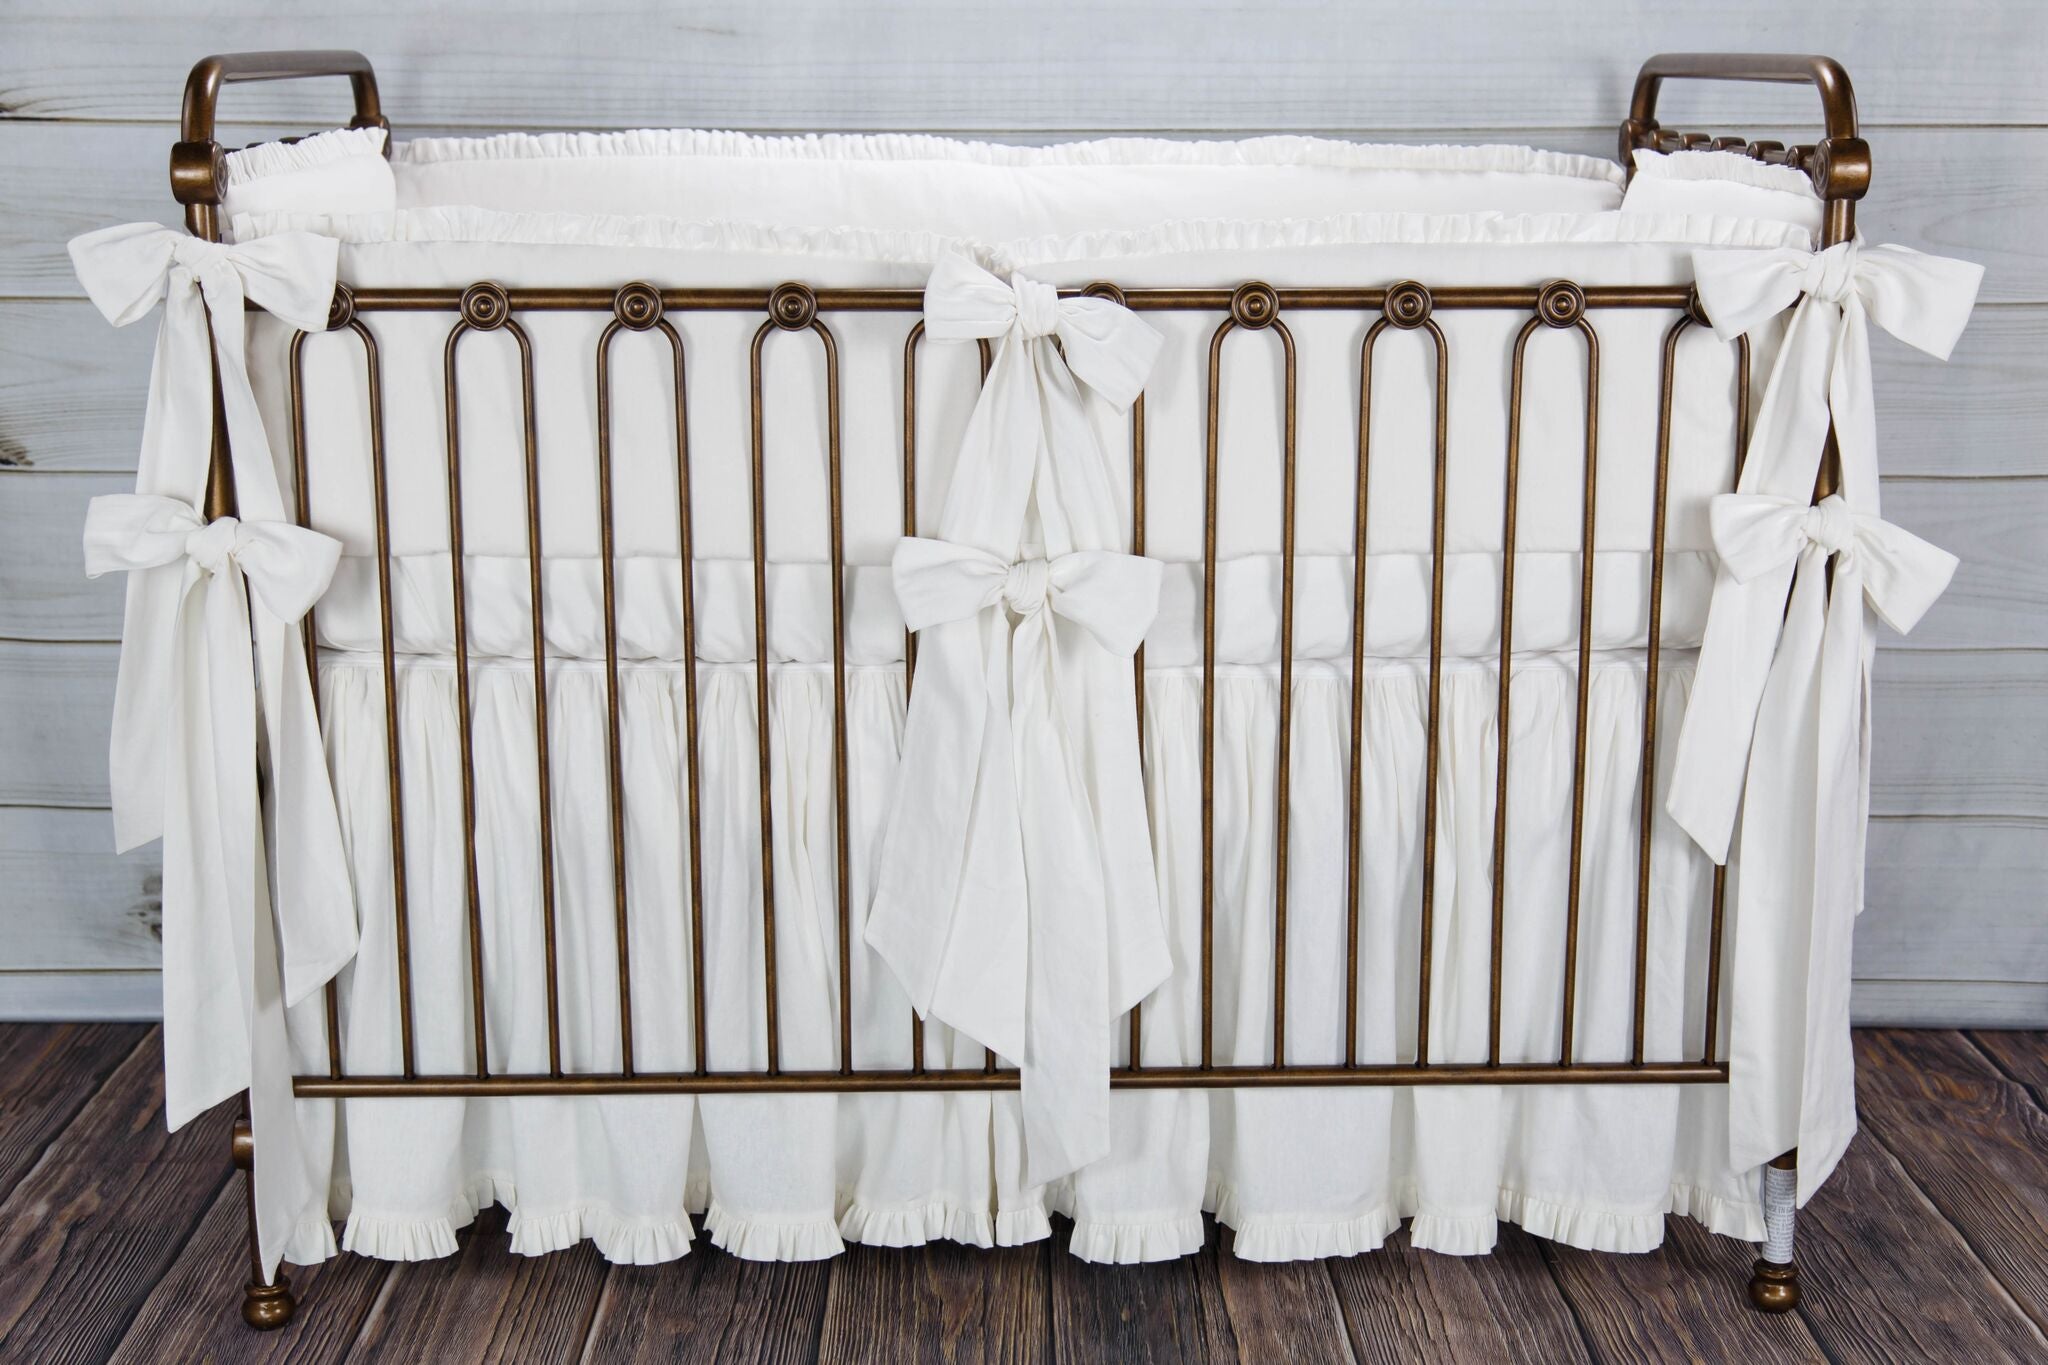 crib bedding collections